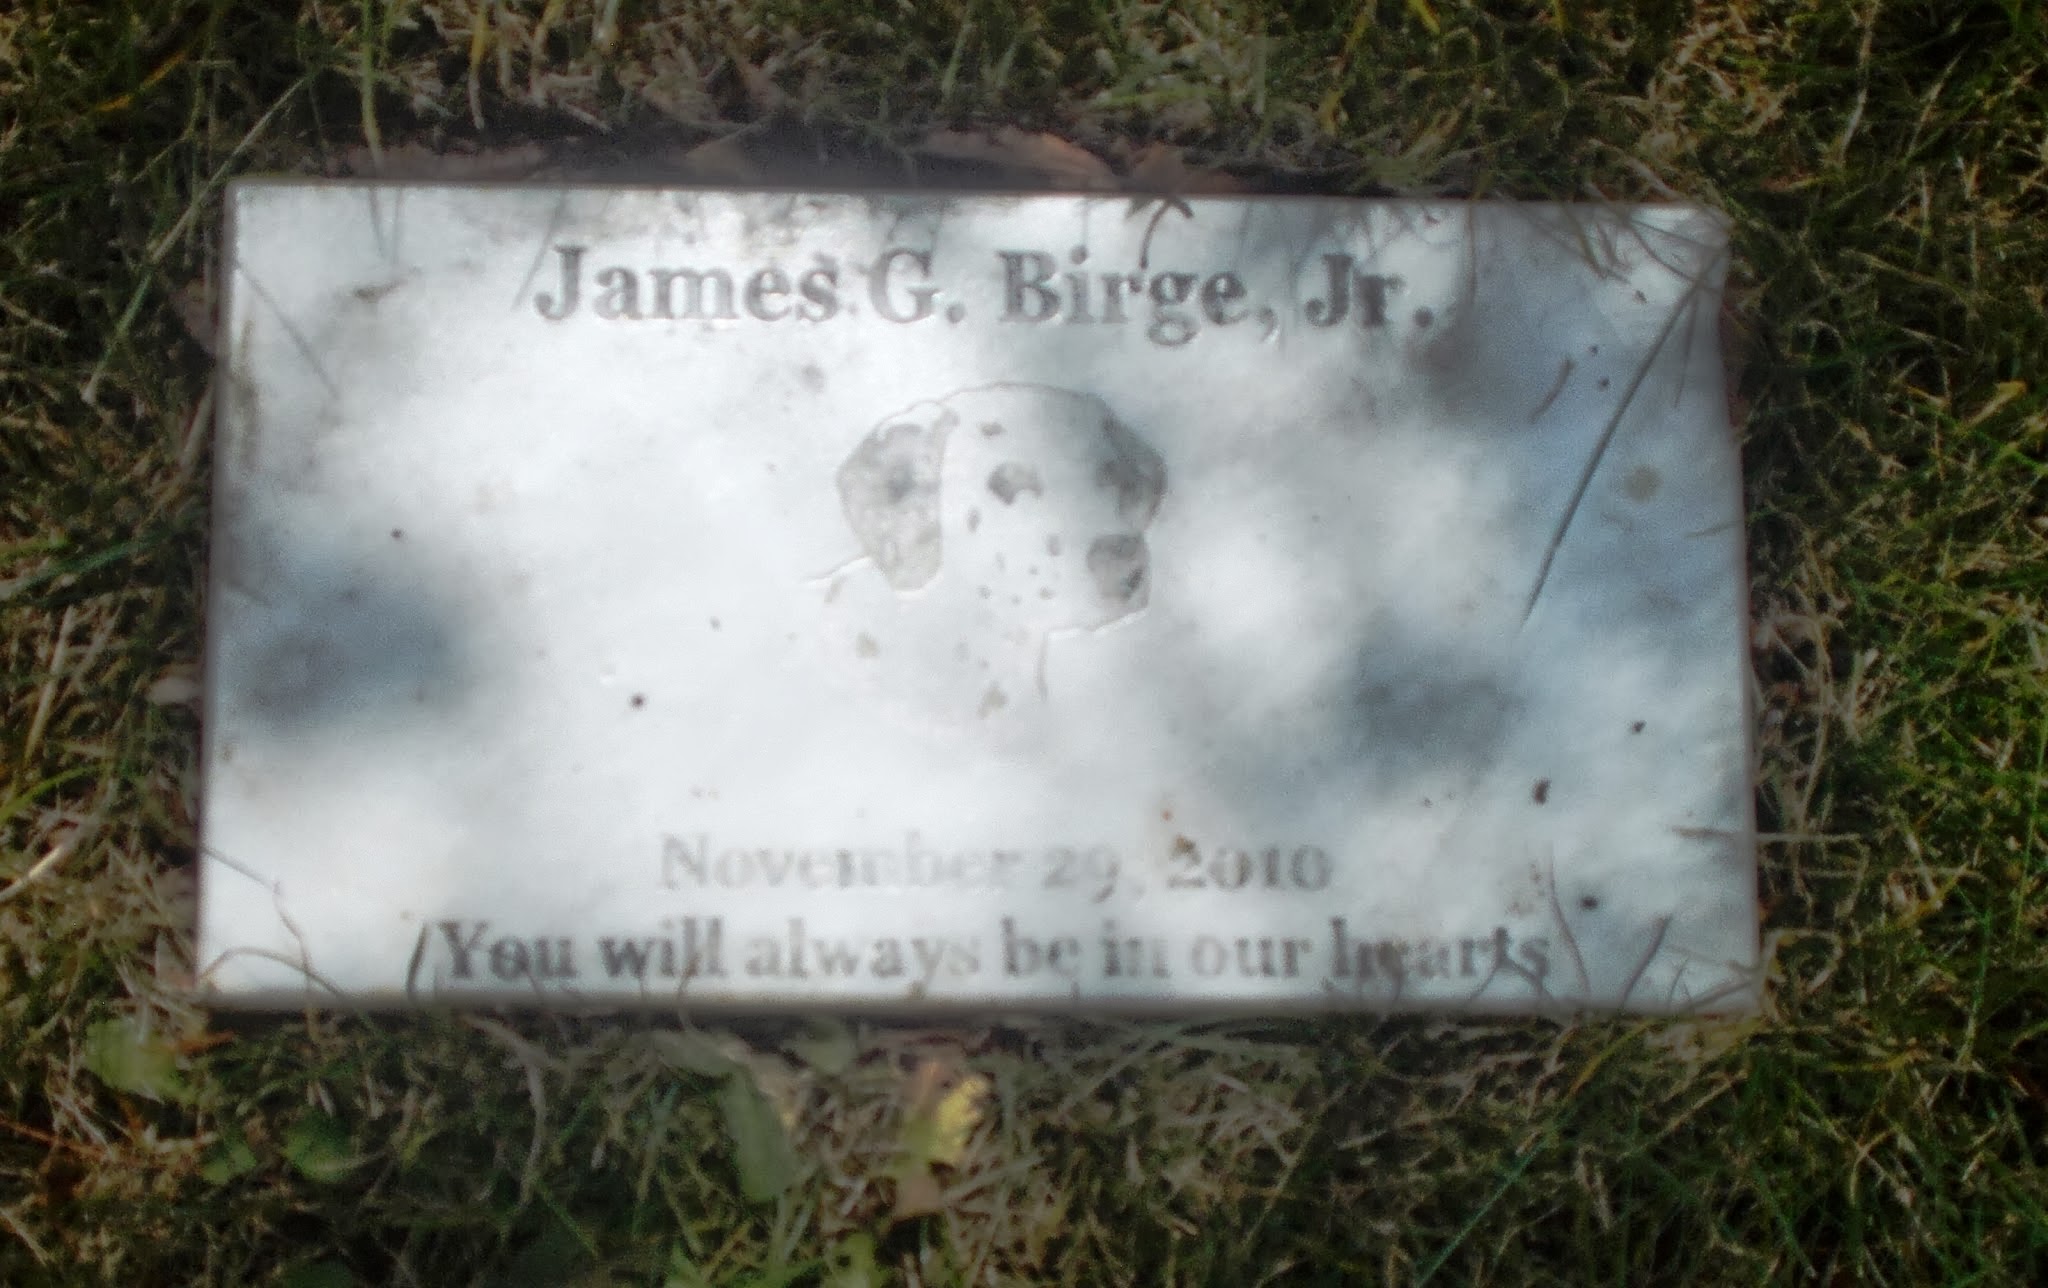 James G Birge, Jr